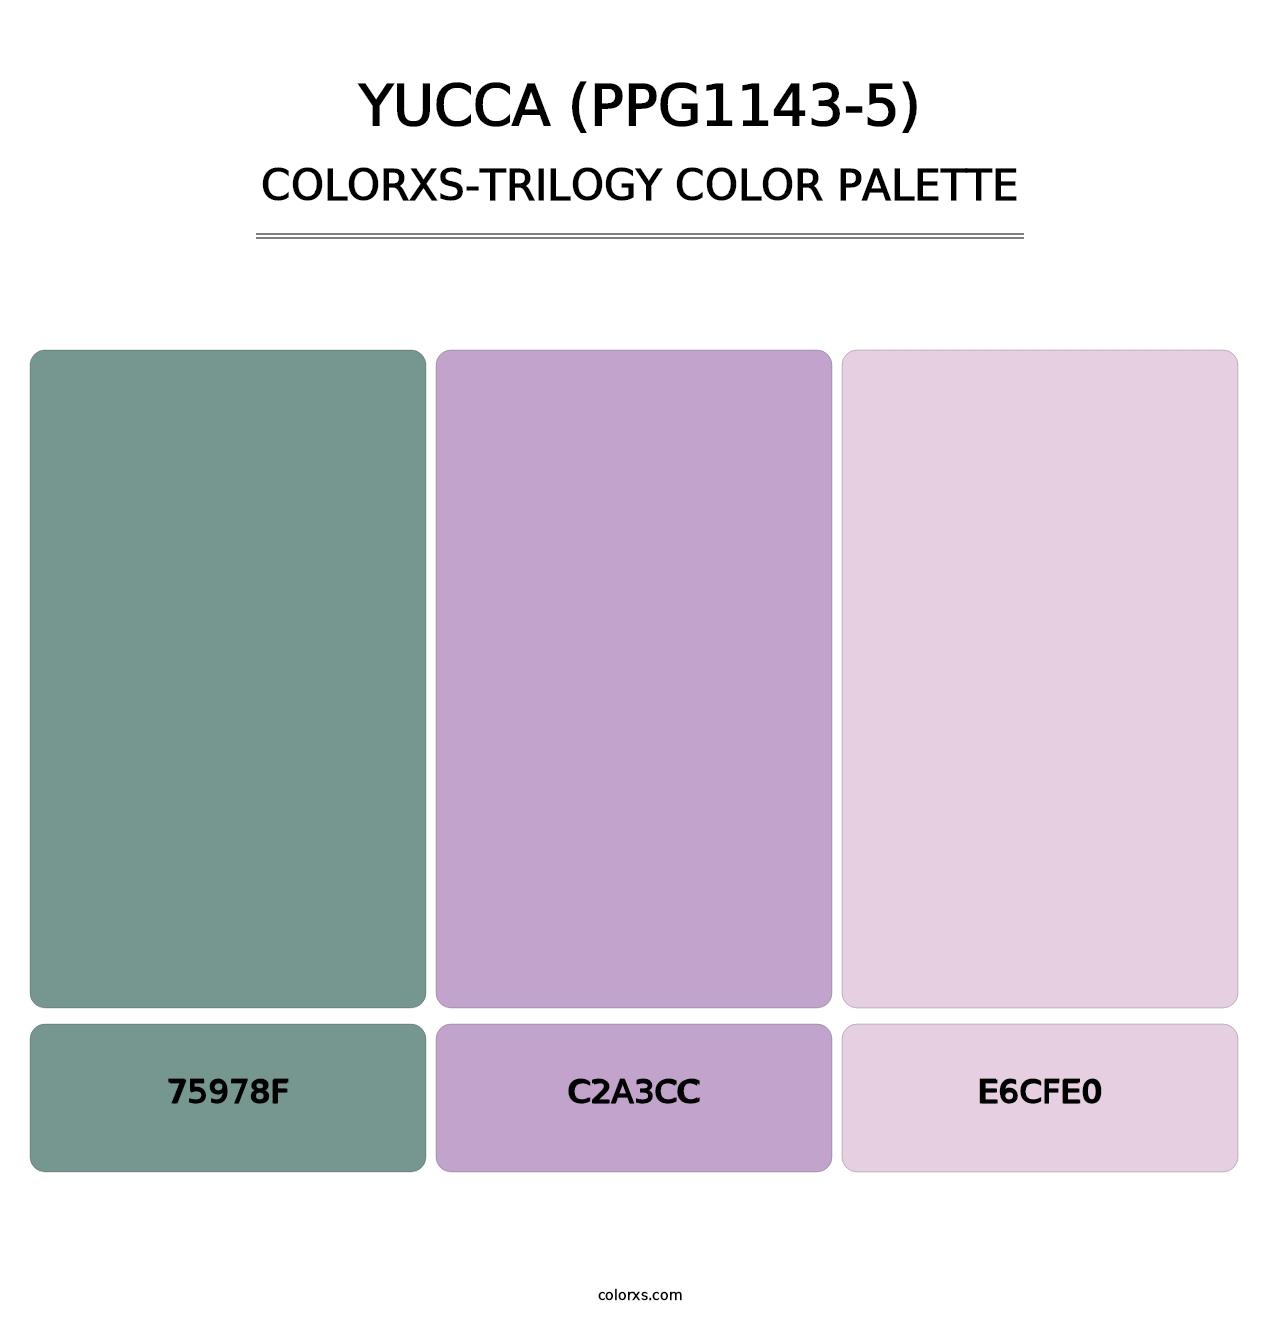 Yucca (PPG1143-5) - Colorxs Trilogy Palette